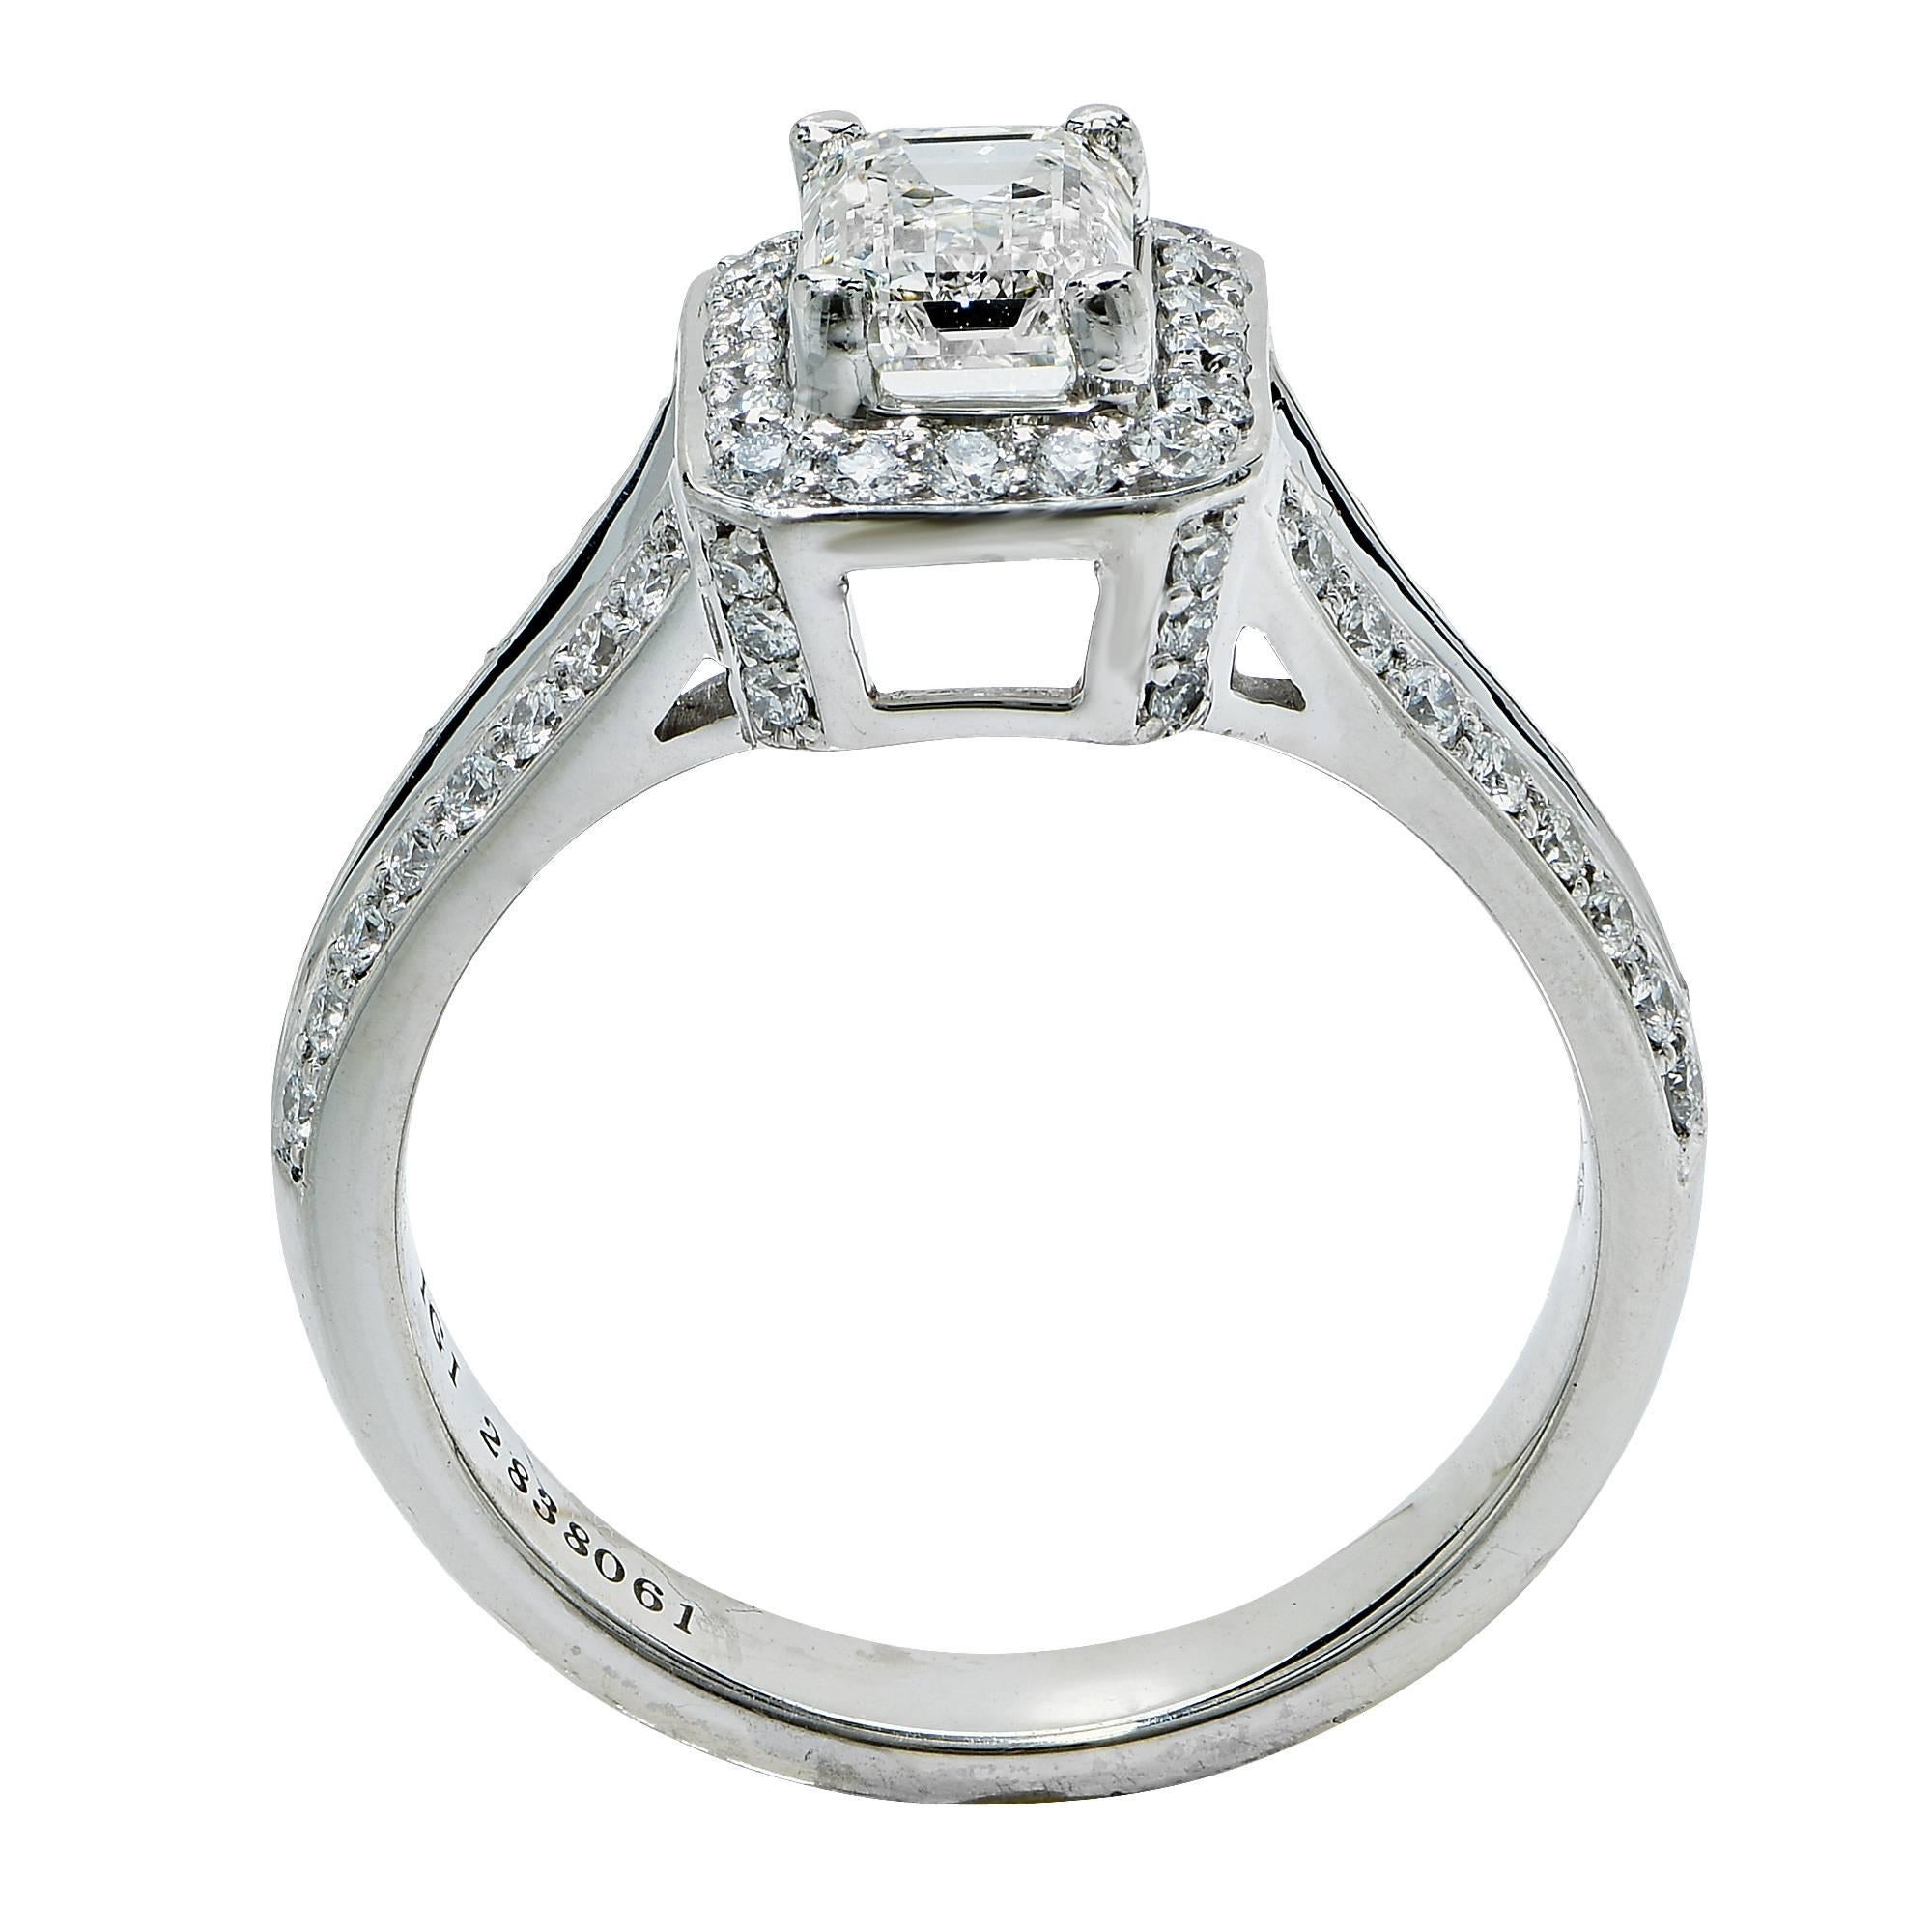 Women's 1.71 Carat Diamond Engagement Ring